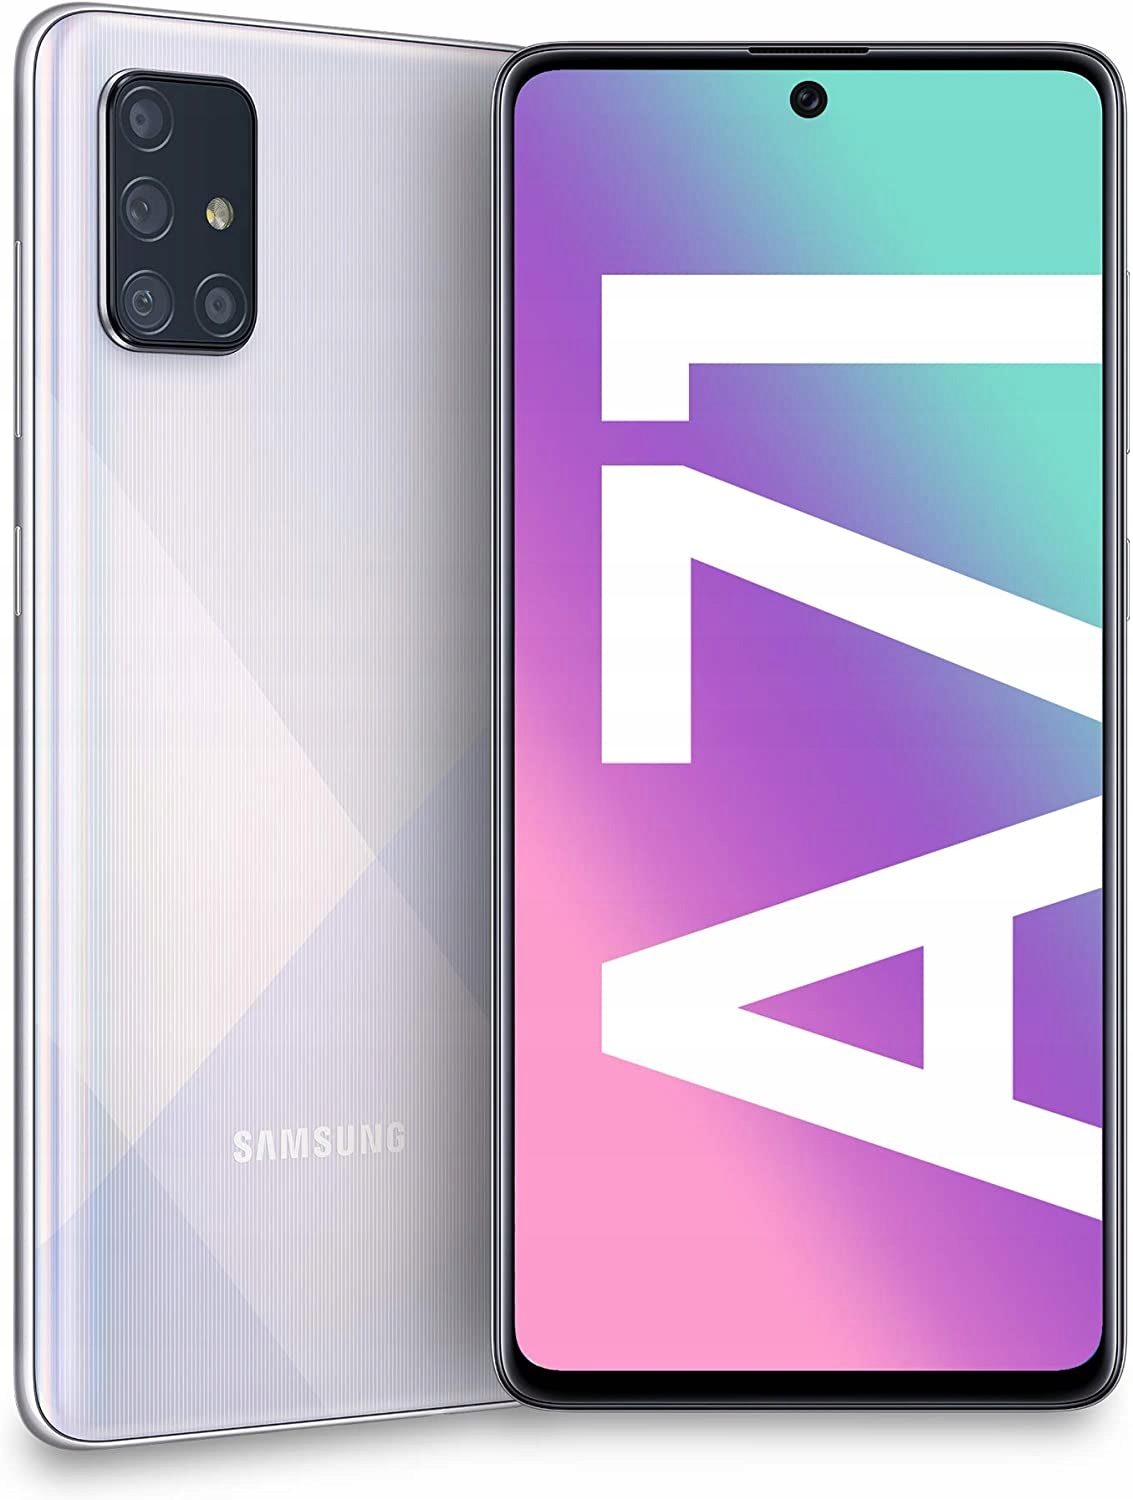 Samsung Galaxy A71 A715FN 6/128GB Prism Crush Silver White